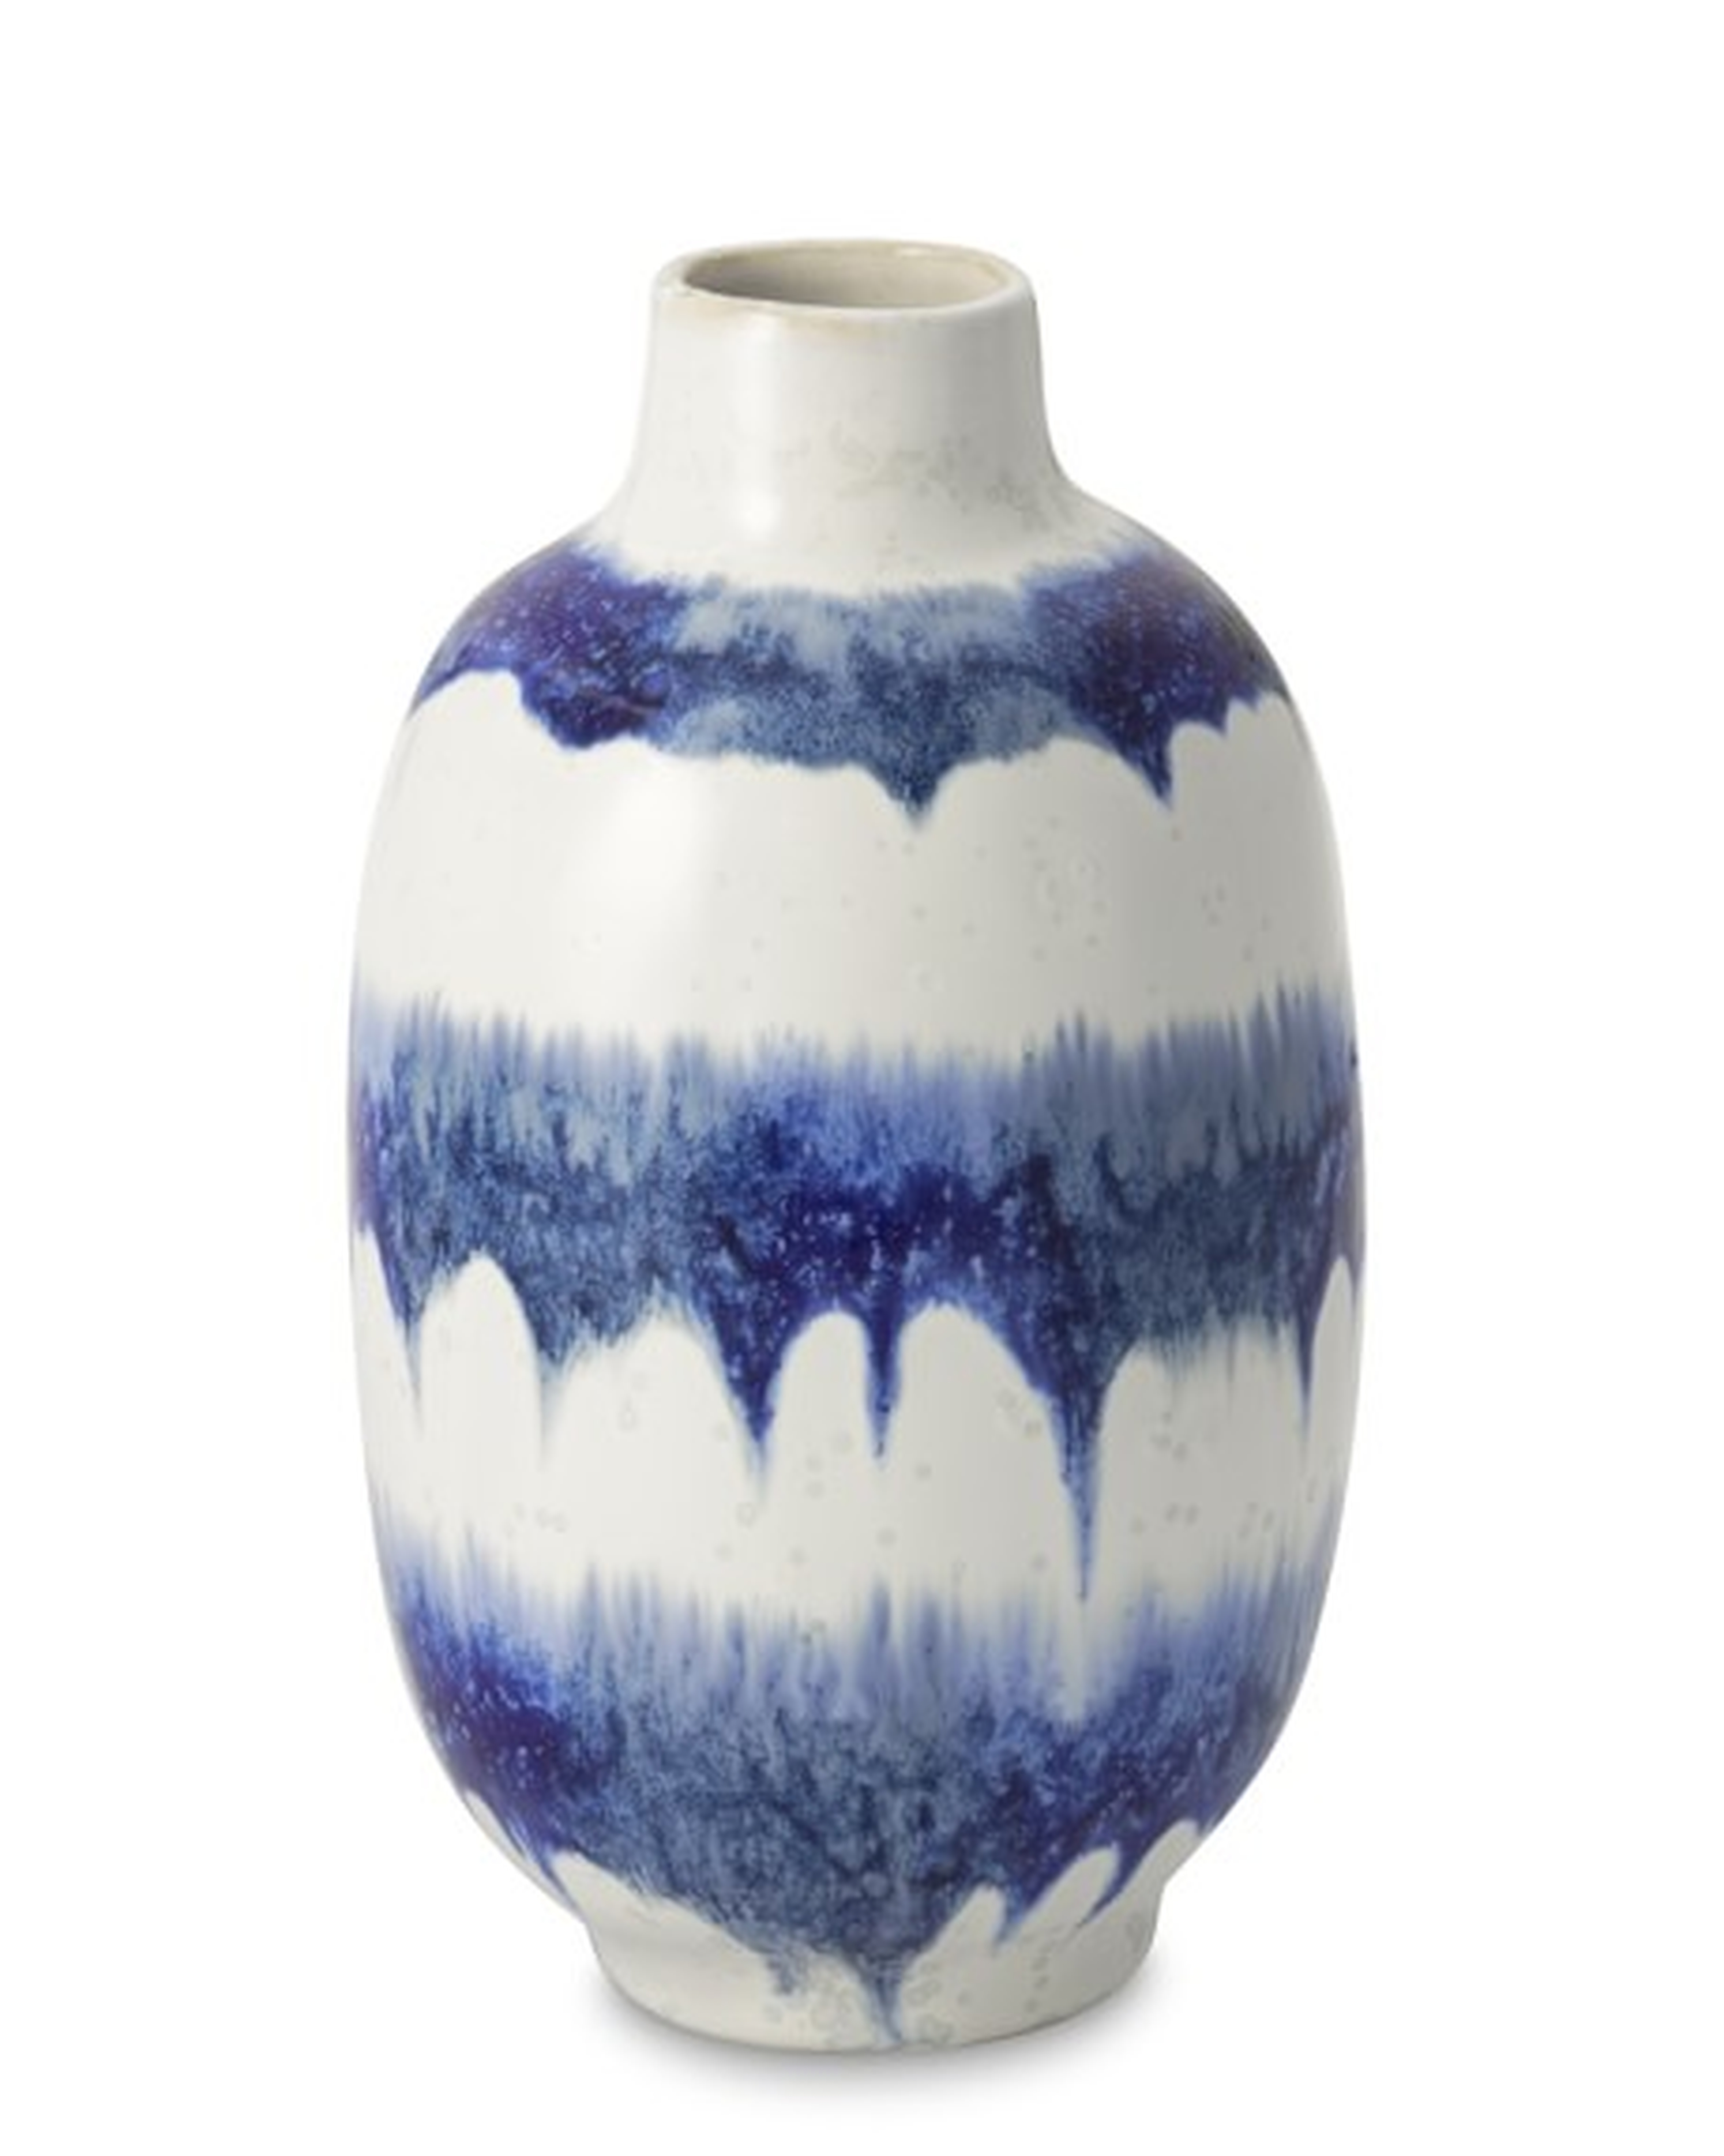 Ceramic Drip Vase - Small - Williams Sonoma Home